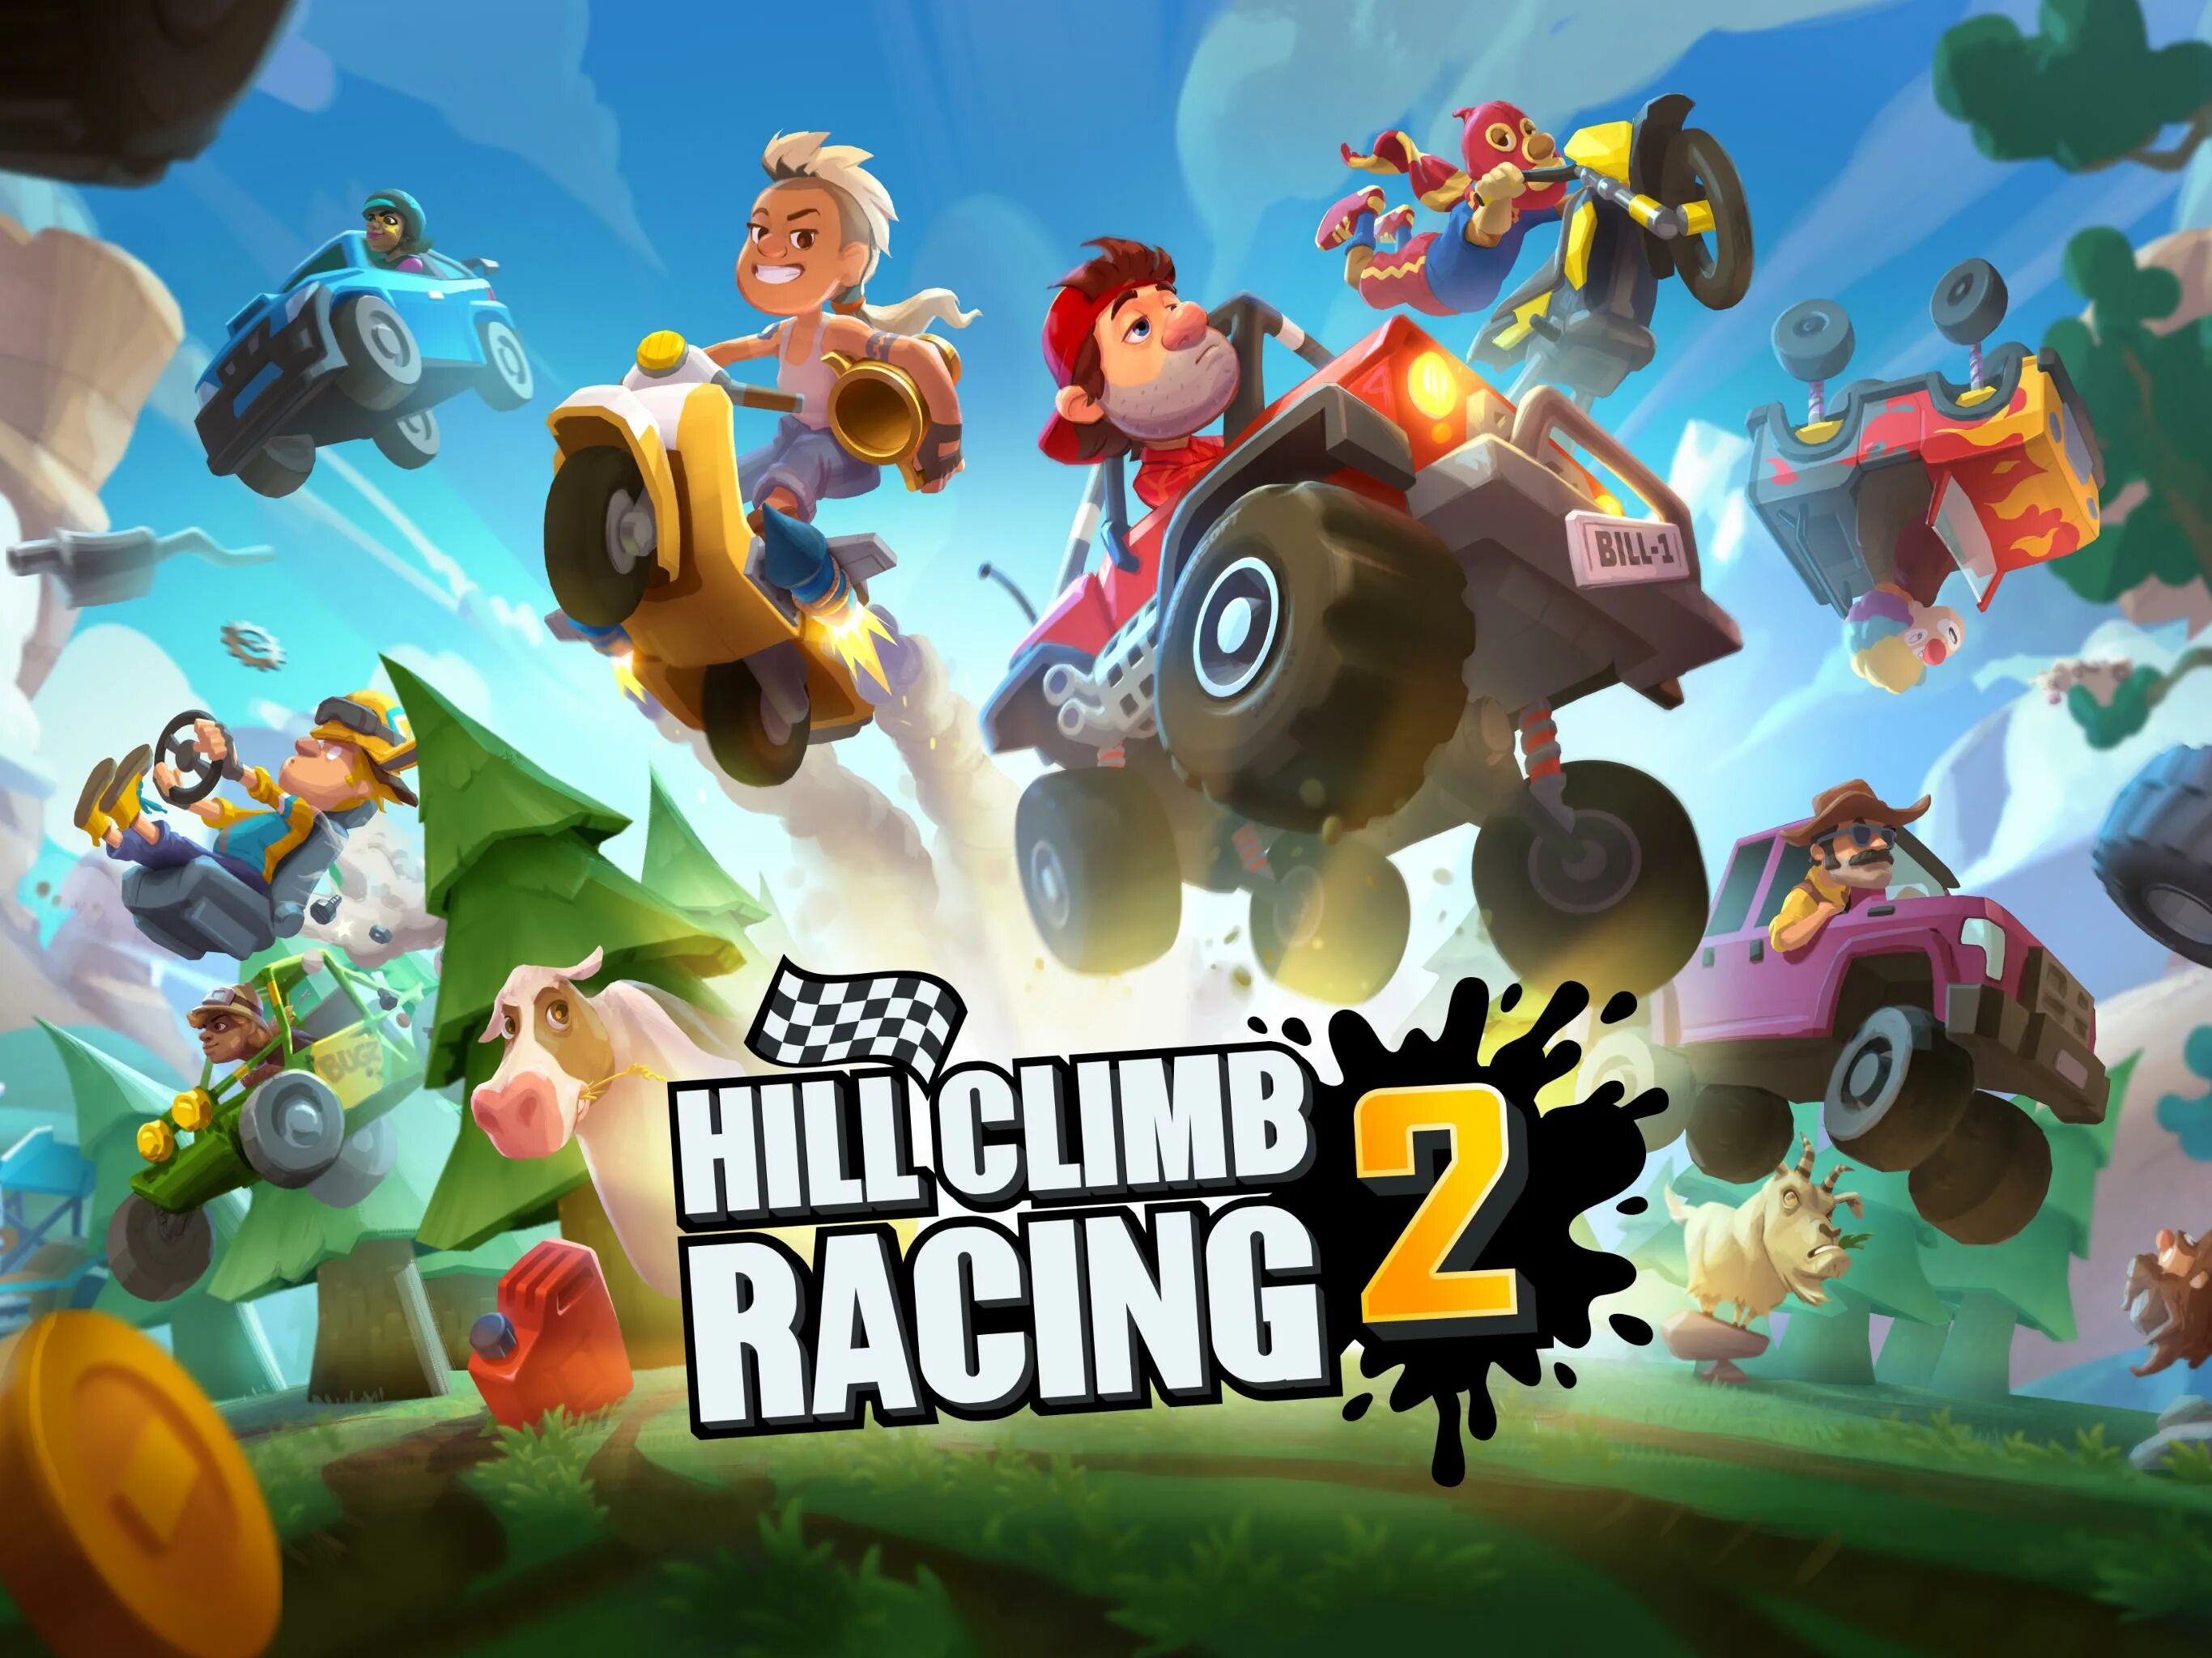 Китайский хилл климб рейсинг 2. Хилл климб рейсинг 2. Китайский Hill Climb Racing 2. Китайская версия Hill Climb Racing 2. Hill Climb Racing 3 fingersoft.